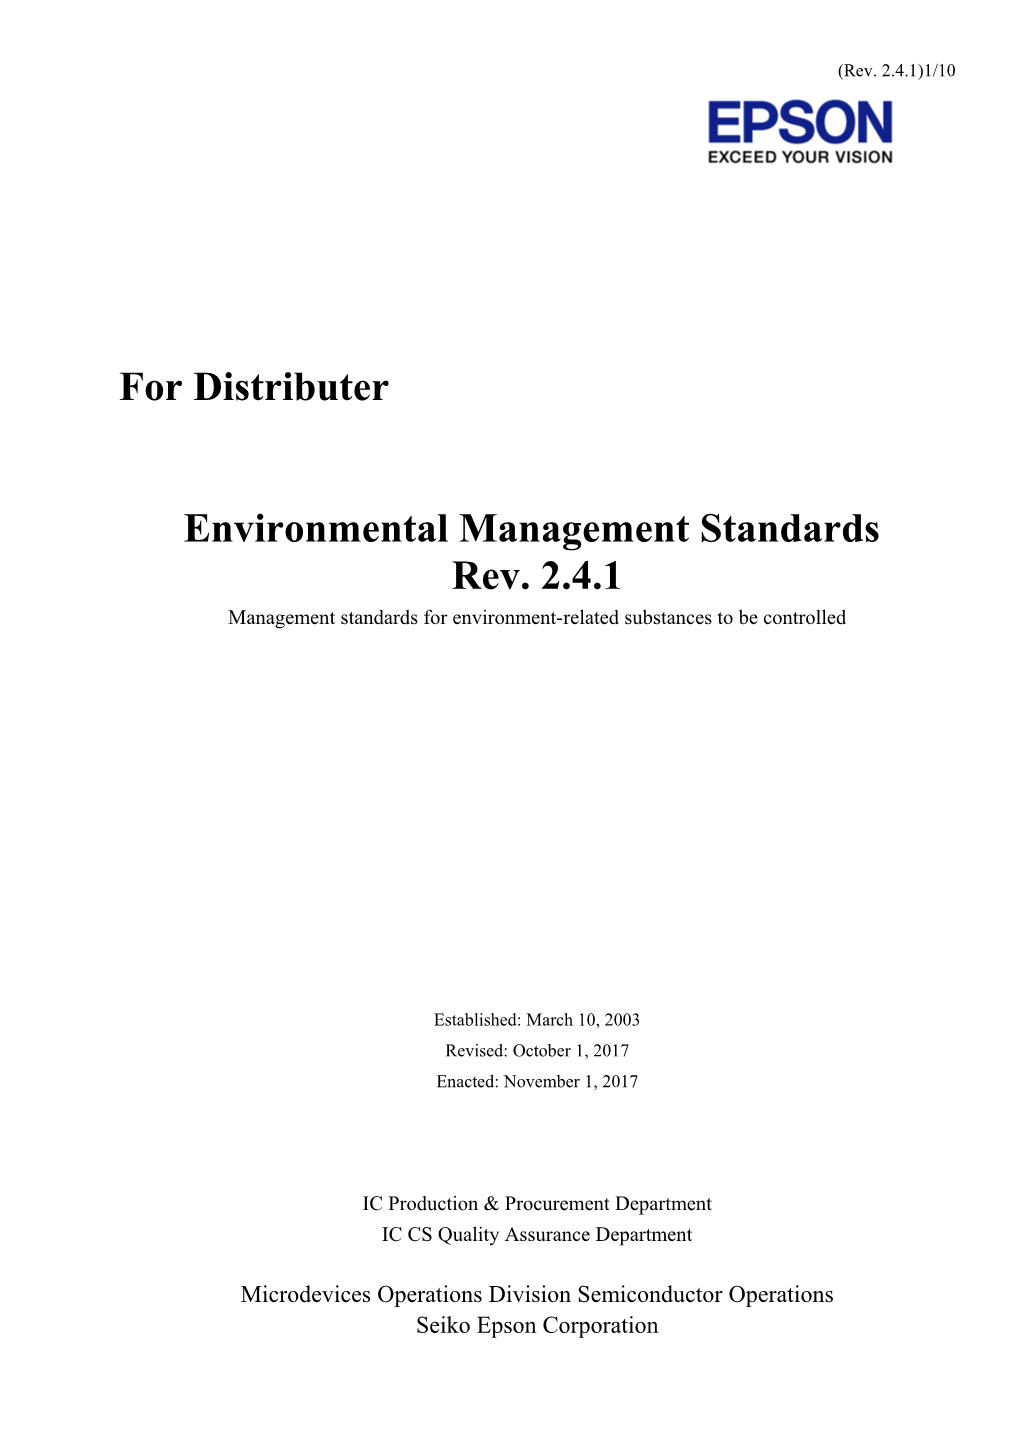 Environmental Management Standards